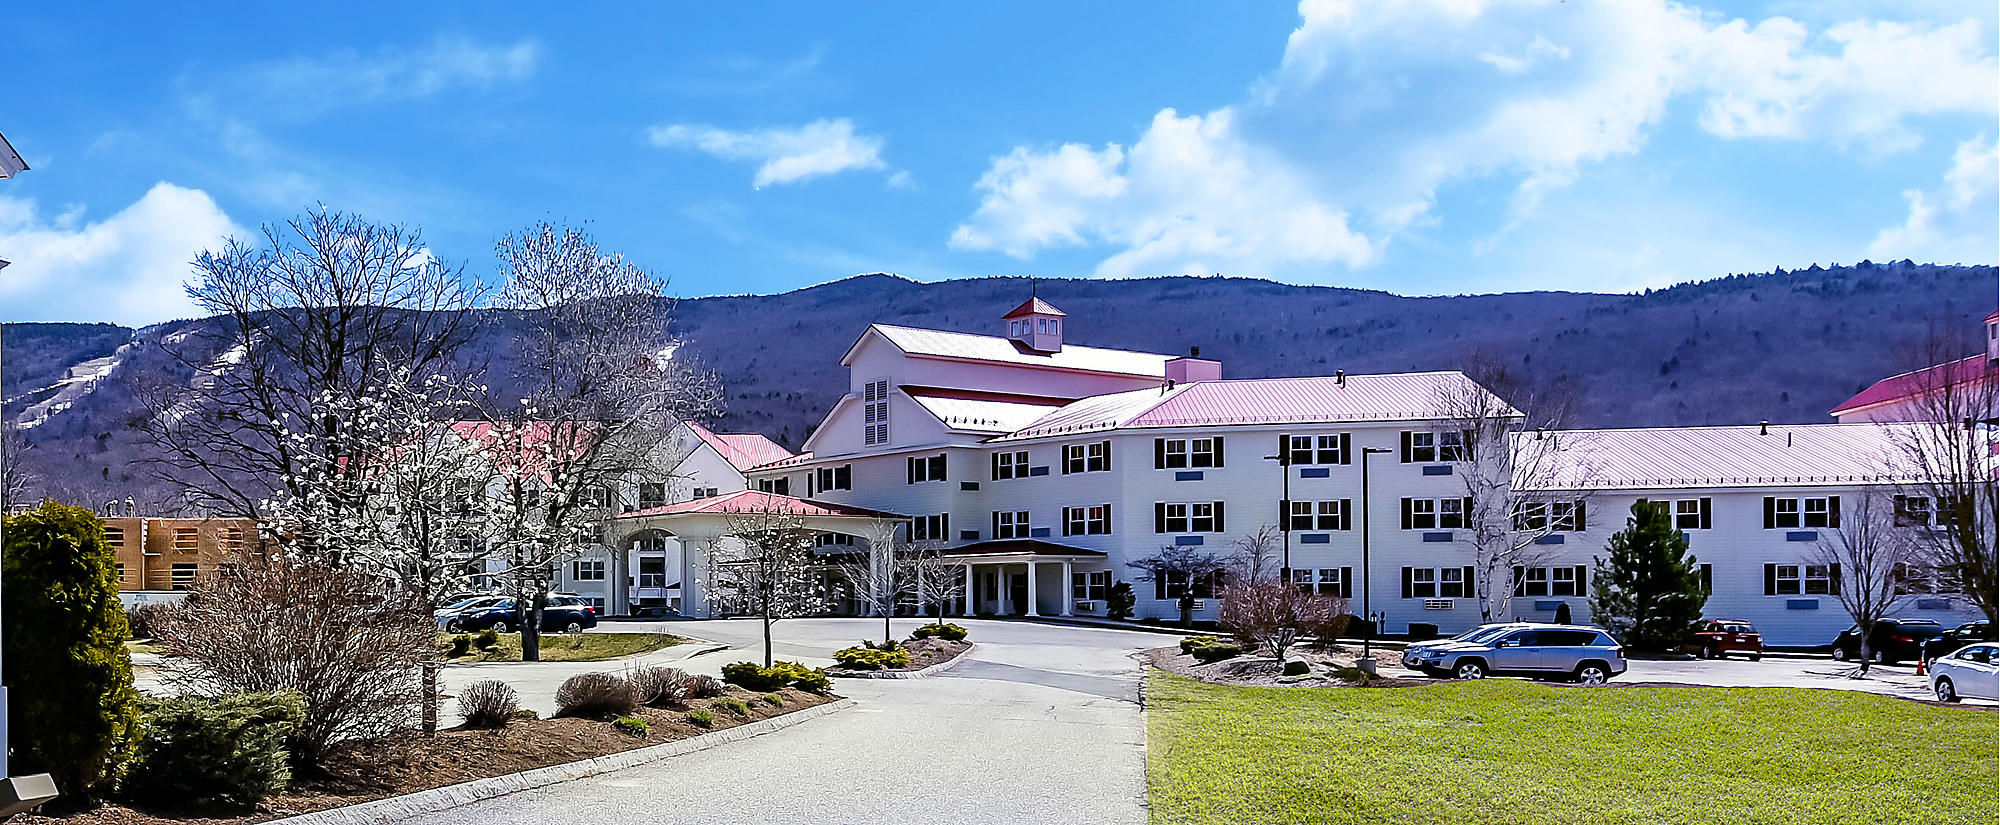 South Mountain Resort 